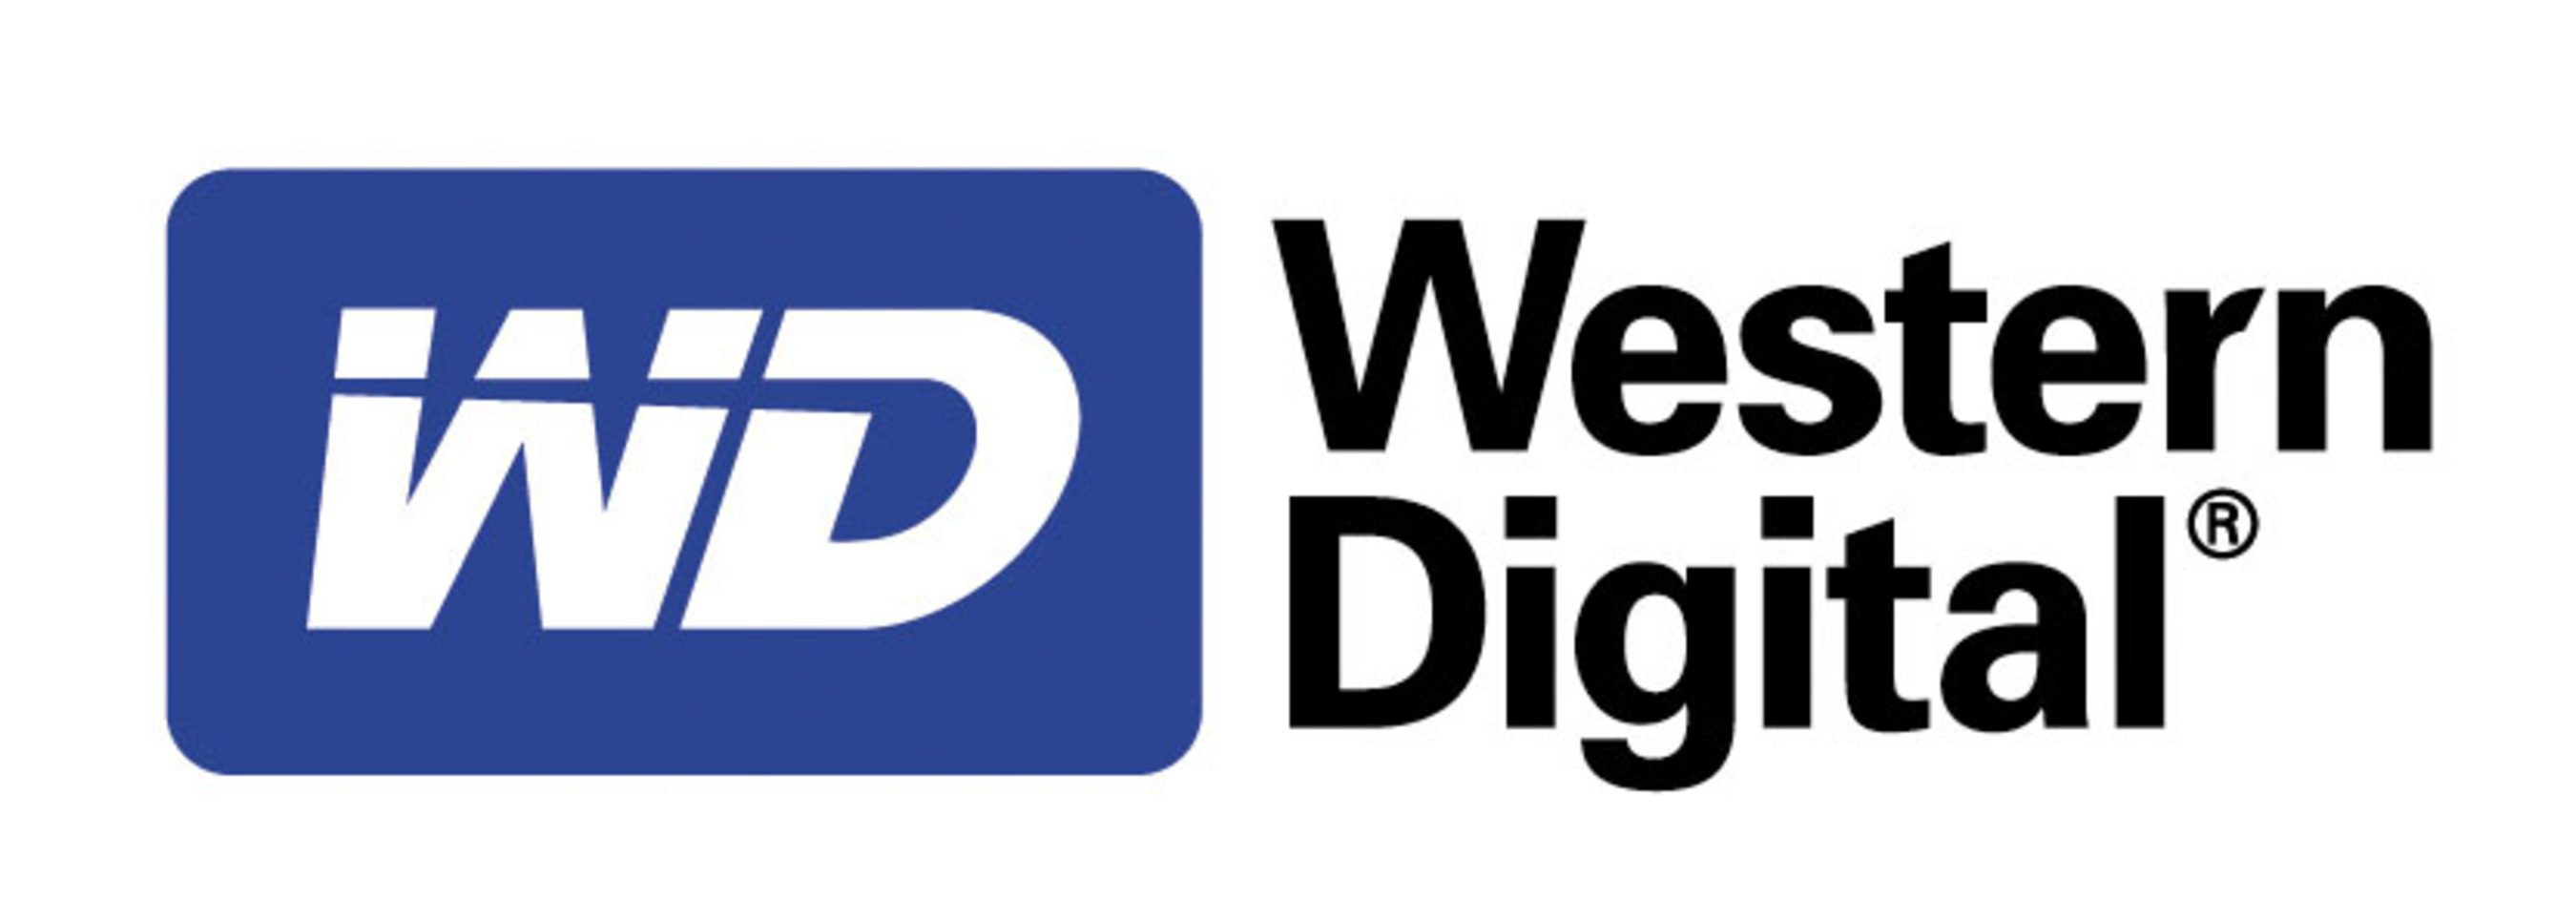 Western Digital Corp. logo.